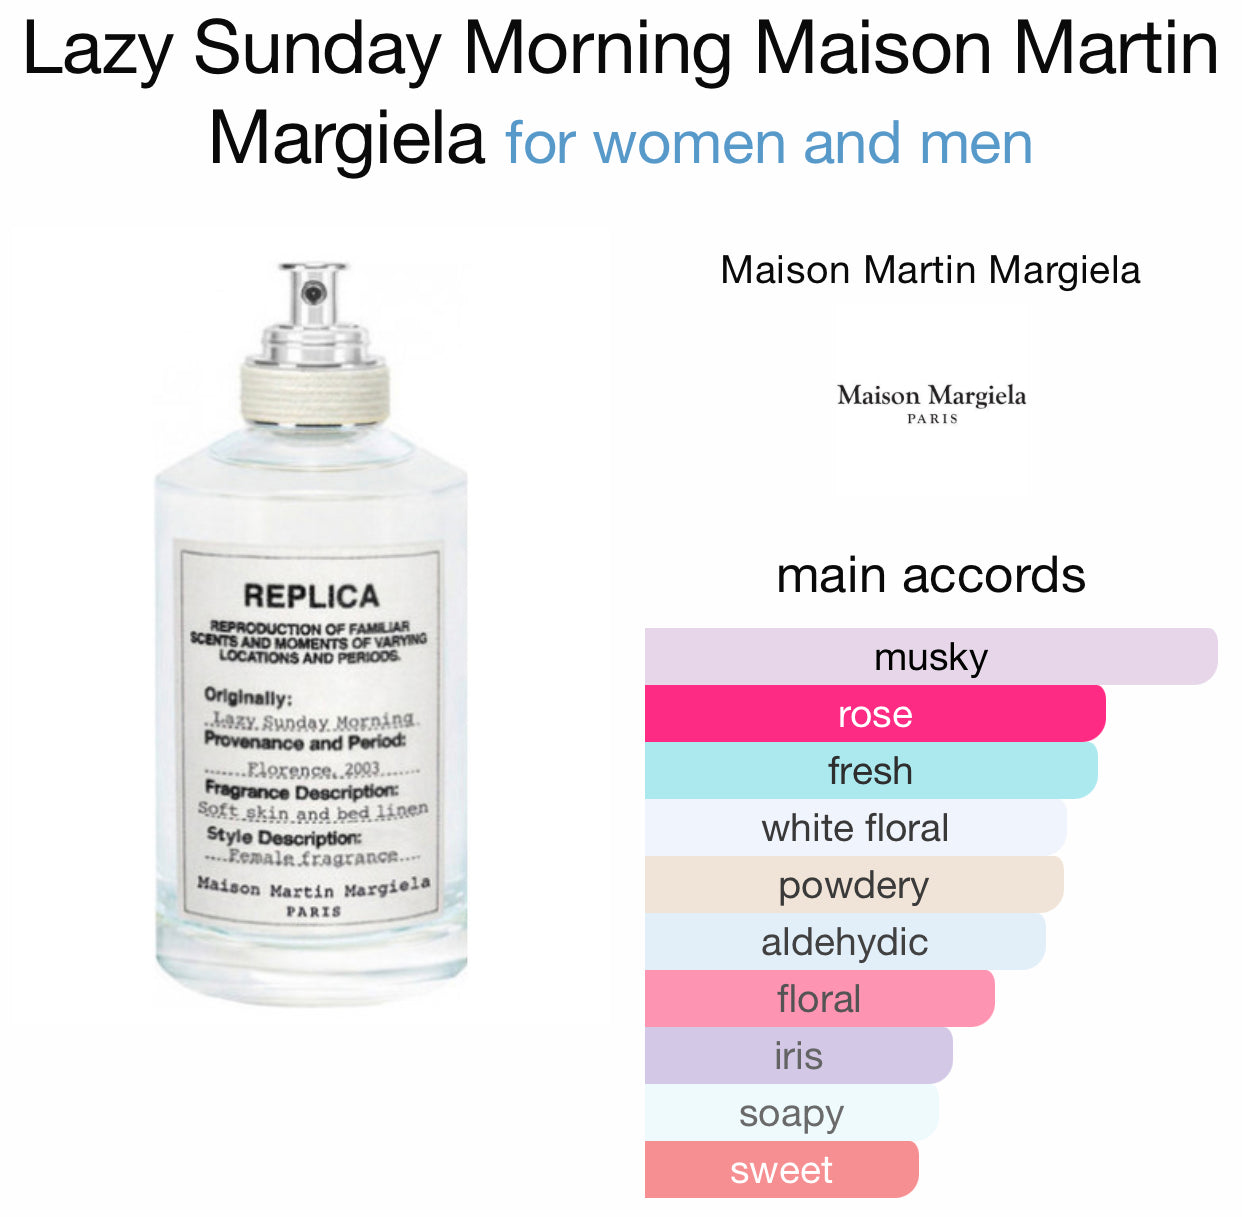 Inspired by Lazy Sunday Morning Eau De Parfum